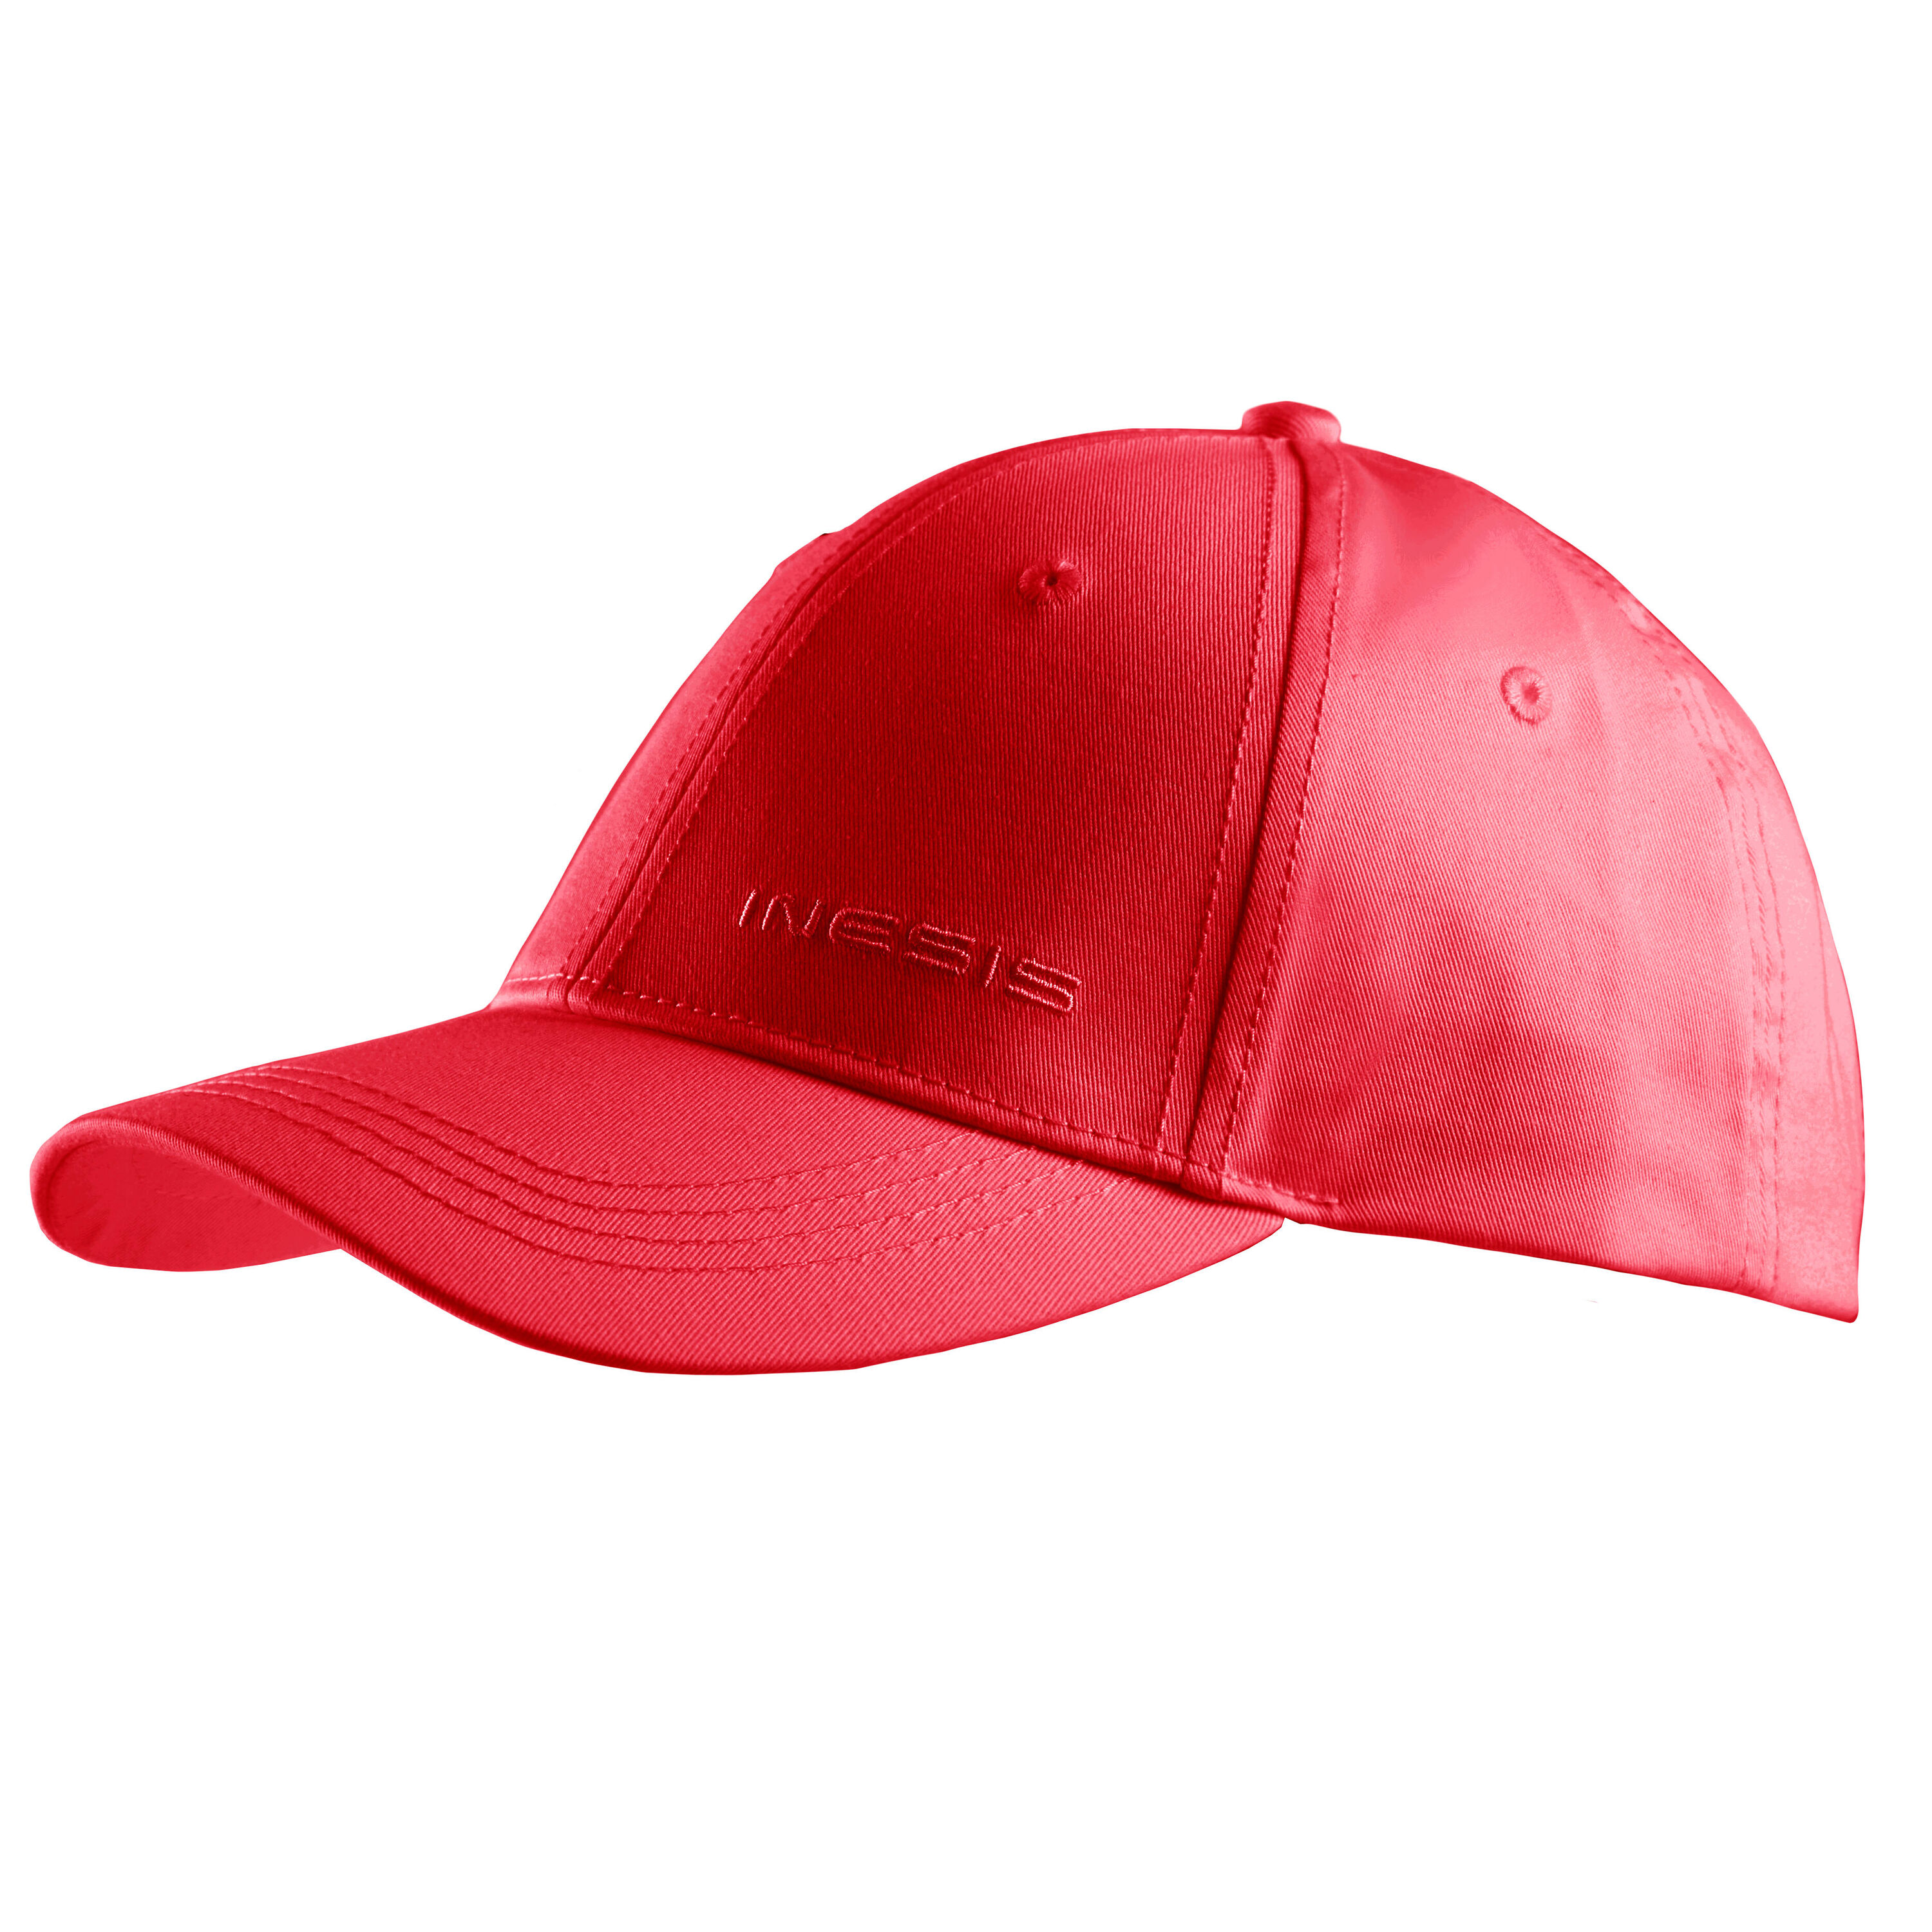 INESIS Adult's golf cap - MW 500 red